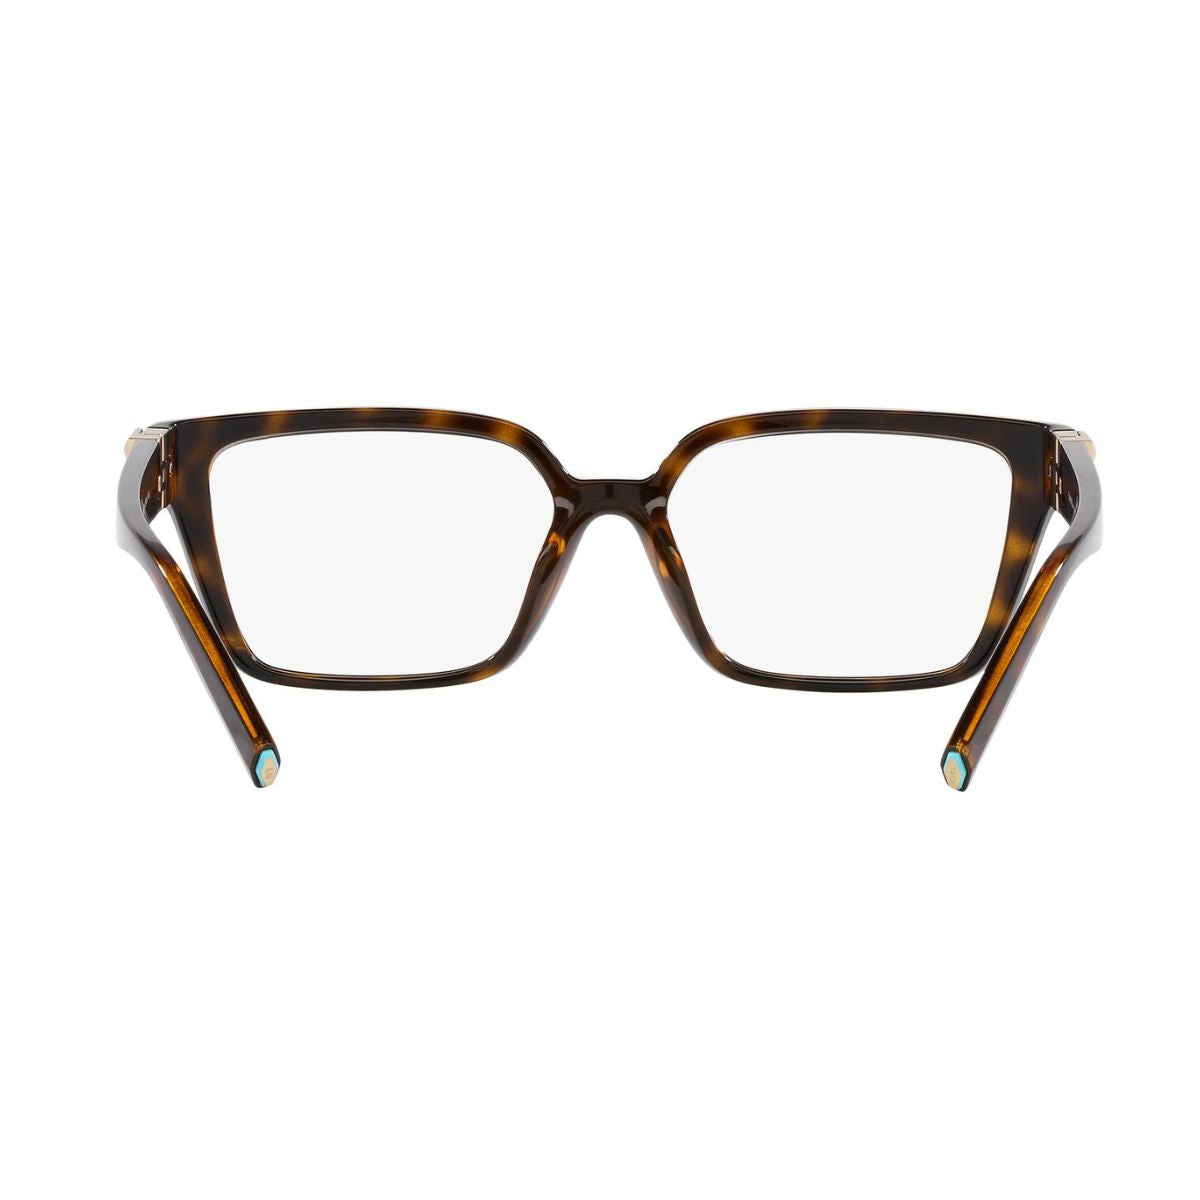 "Tiffany & Co 2232-U 8015 Prescription Glasses Frame For Women's At Optorium"